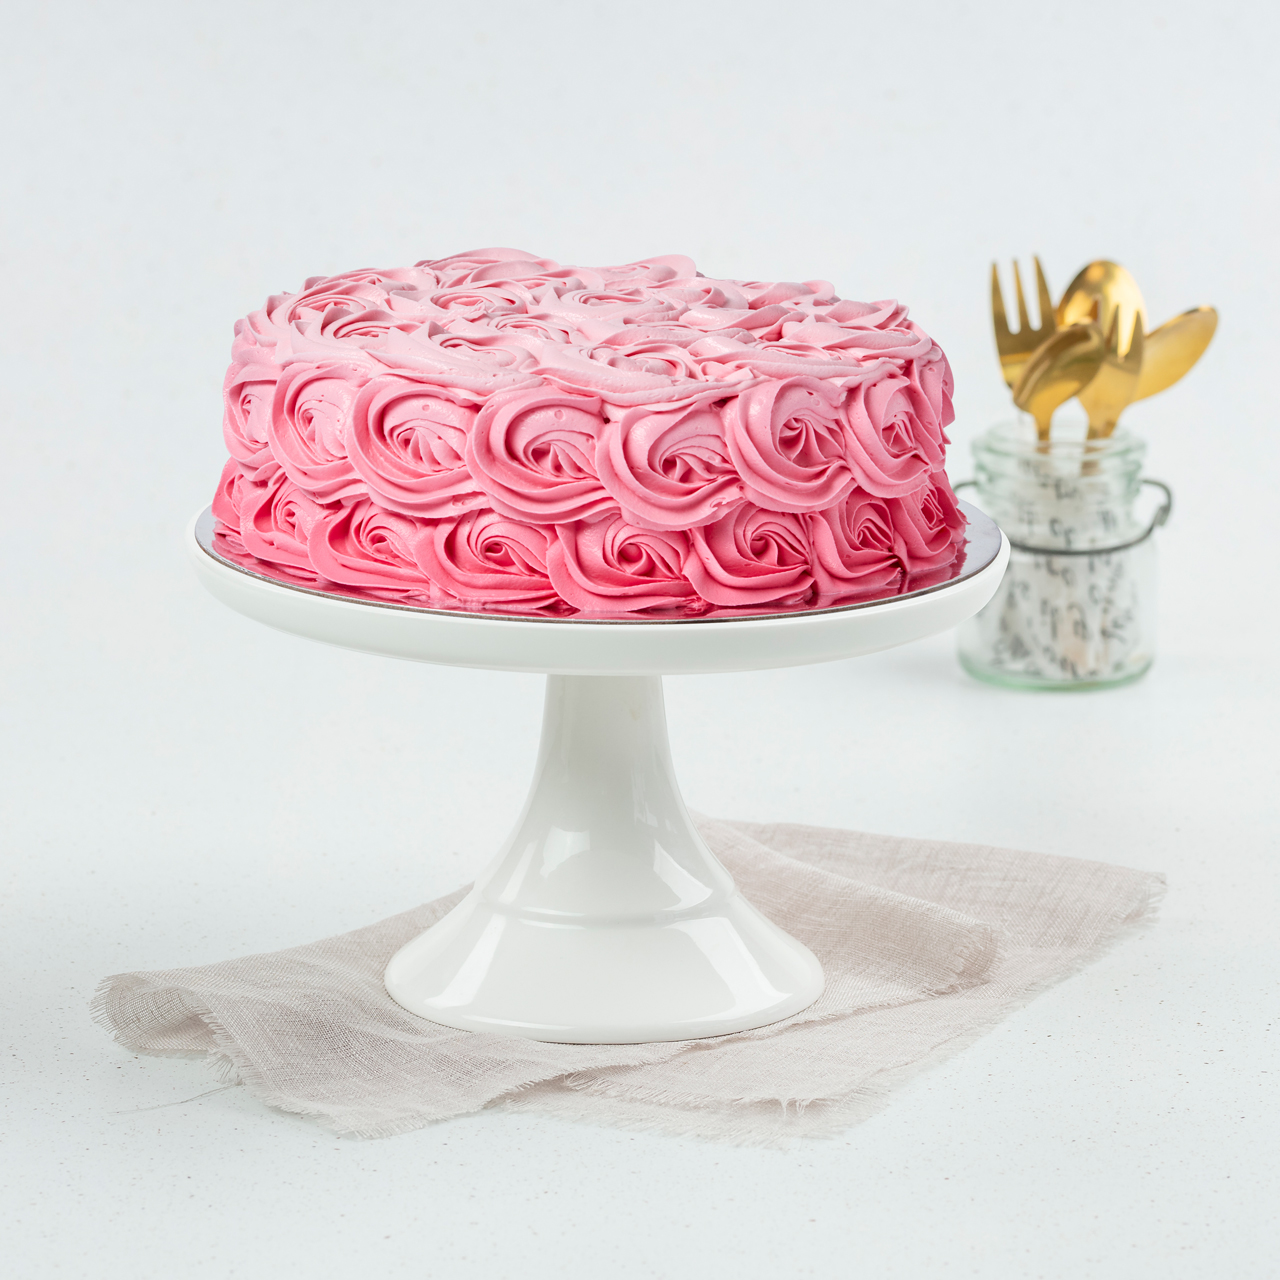 Elegant Rose and Hydrangeas Wedding Anniversary Single tier Cake